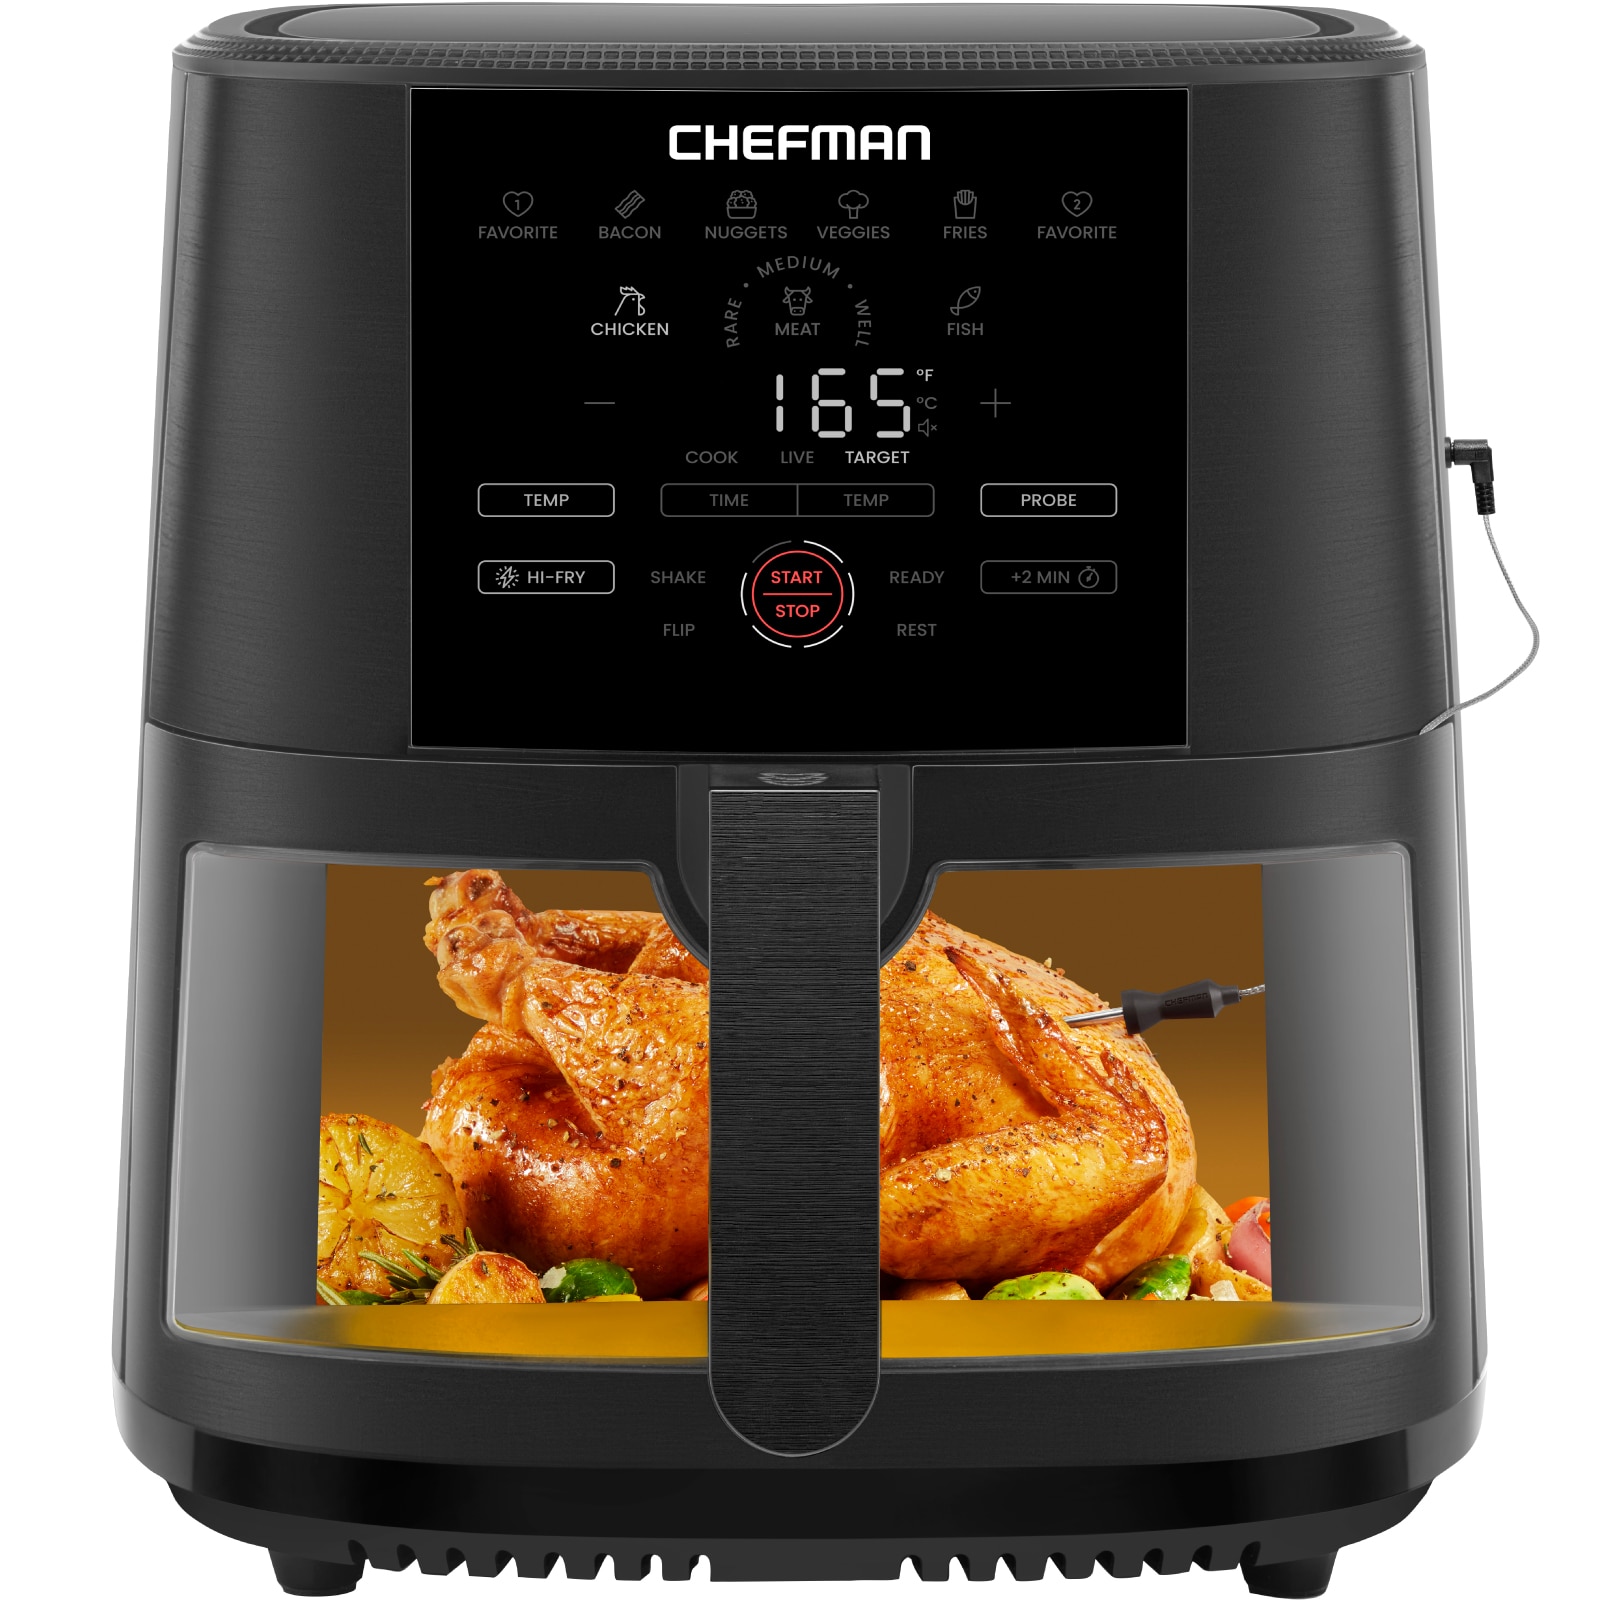 Chefman - TurboFry Touch 8 qt. Air Fryer w/ Advanced Digital Display - Black